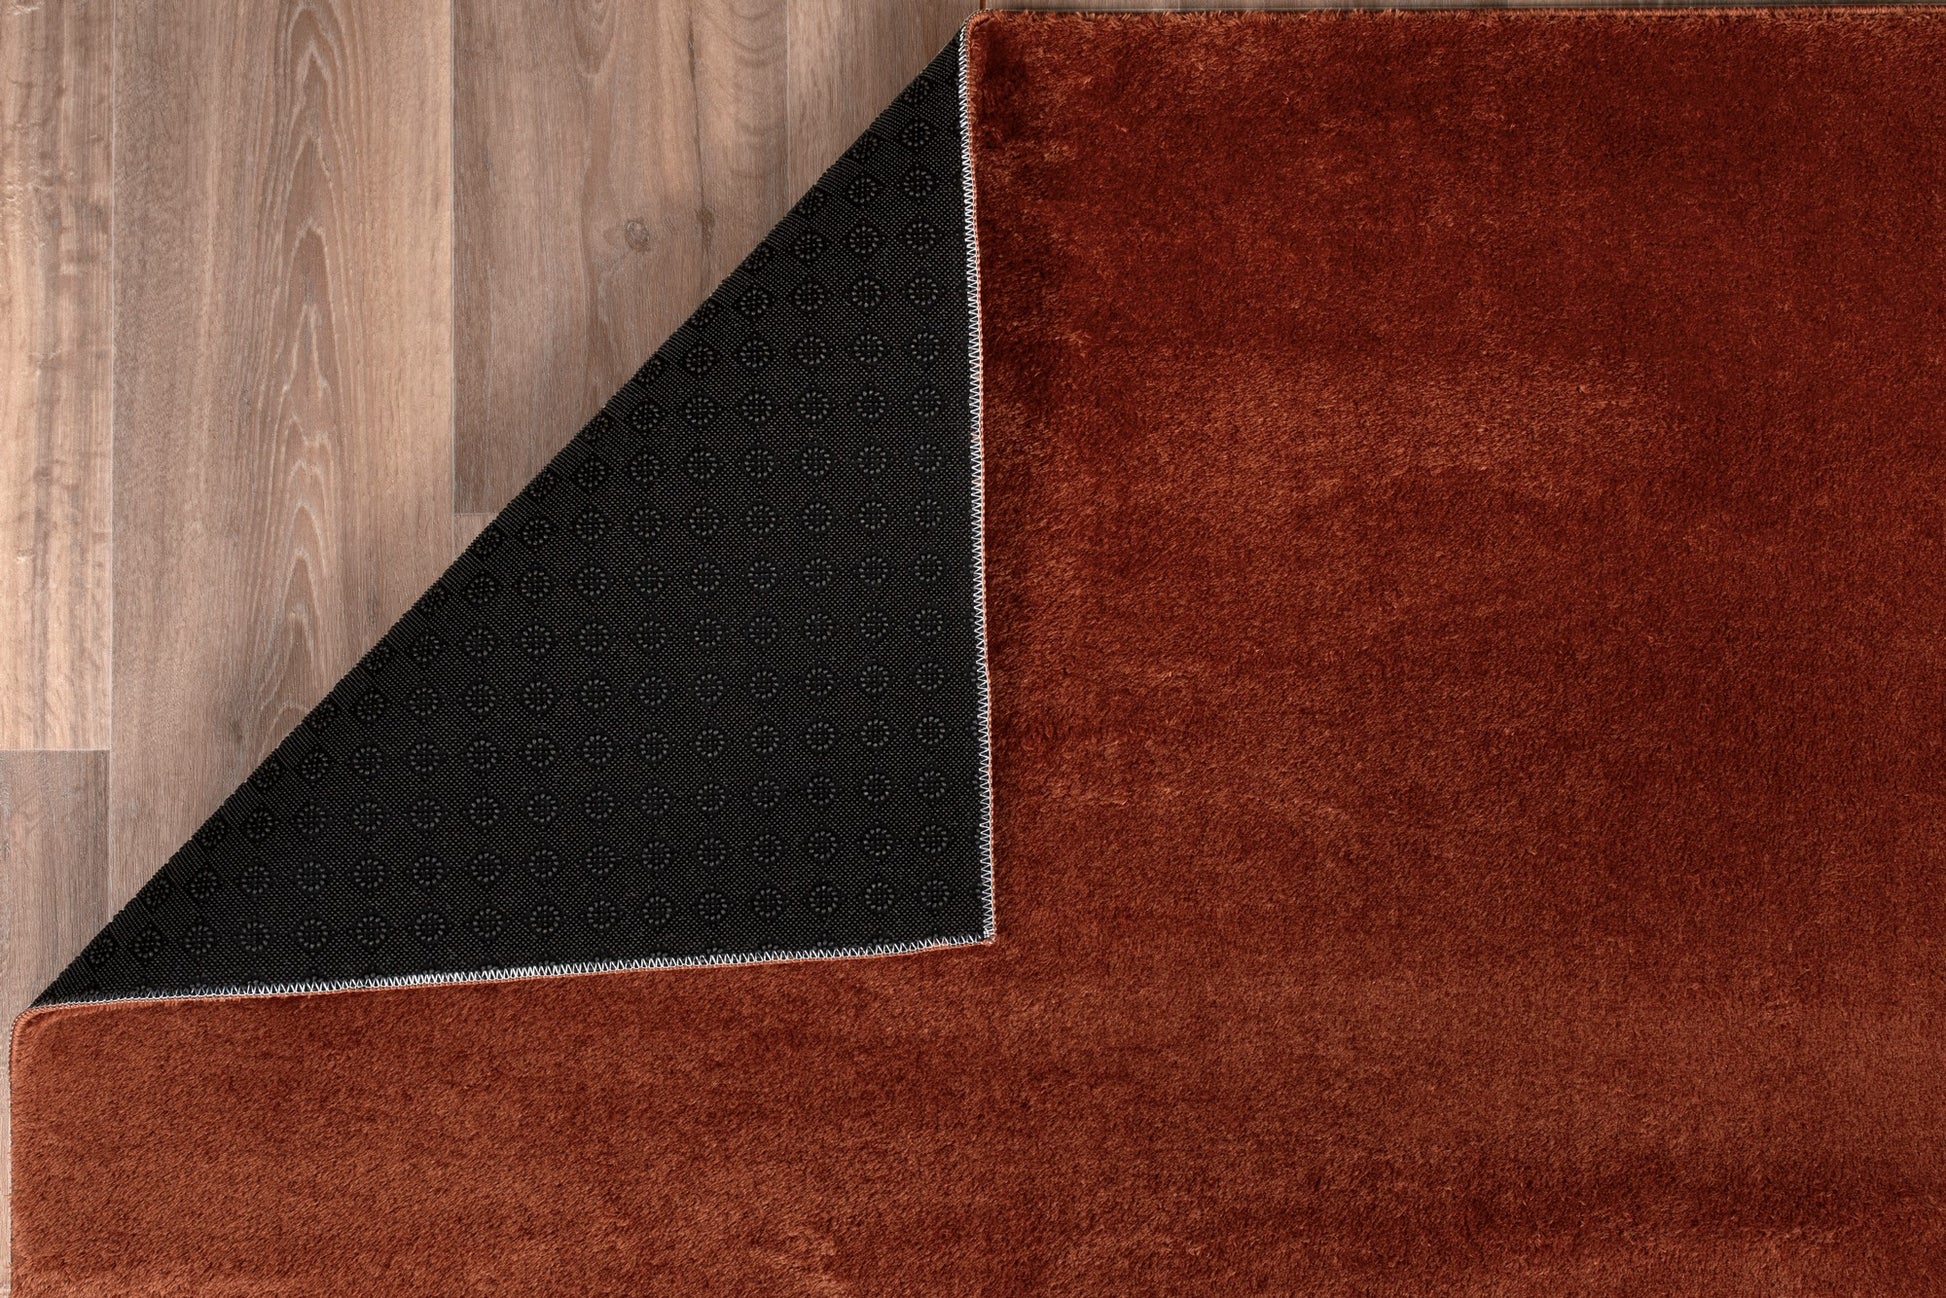 copper mustard fluffy soft machine washable area rug for living room bedroom 6x8, 6x9 ft Living Room, Bedroom, Dining Area, Kitchen Carpet